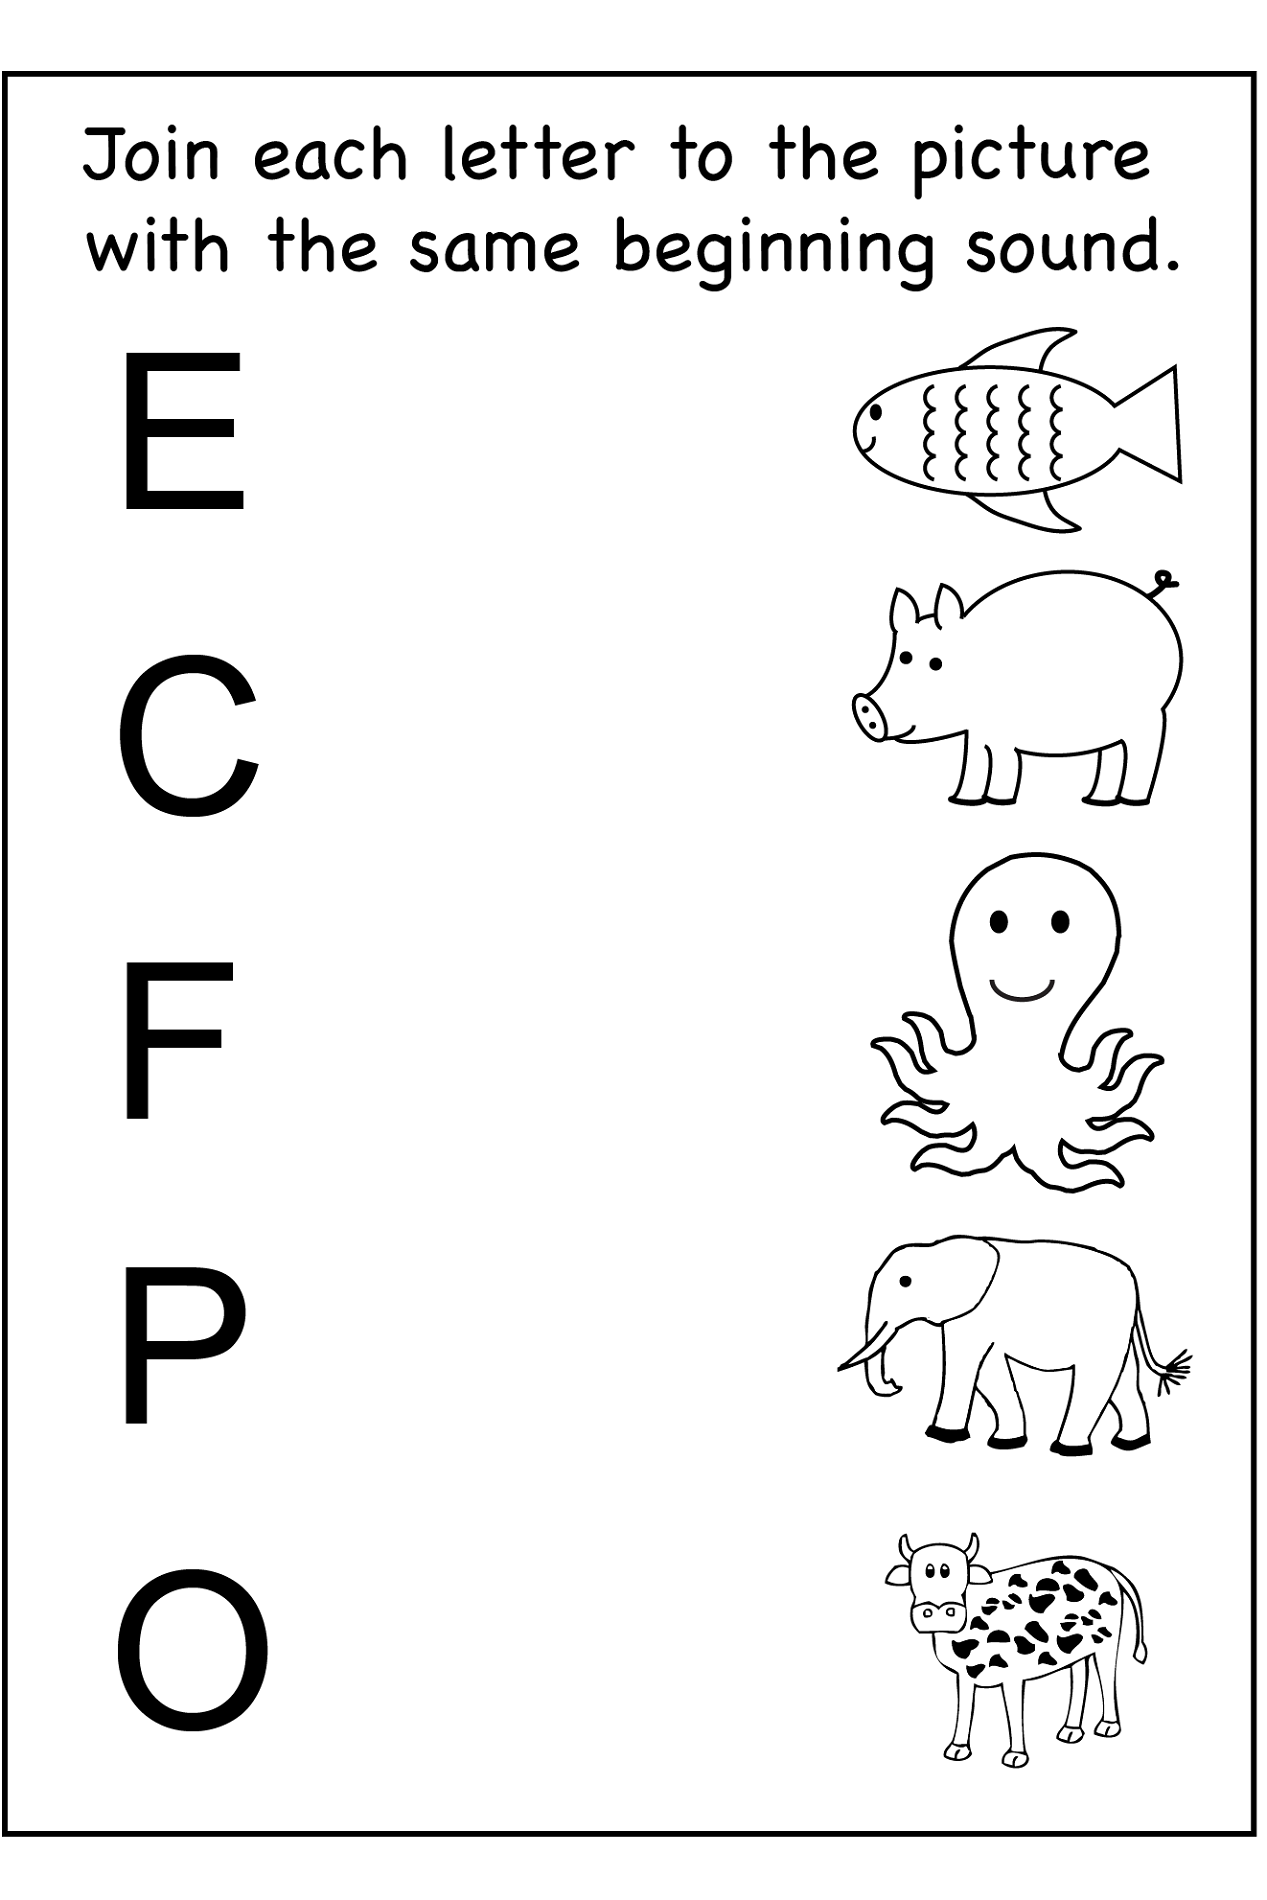 Preschool Activity Sheets To Print